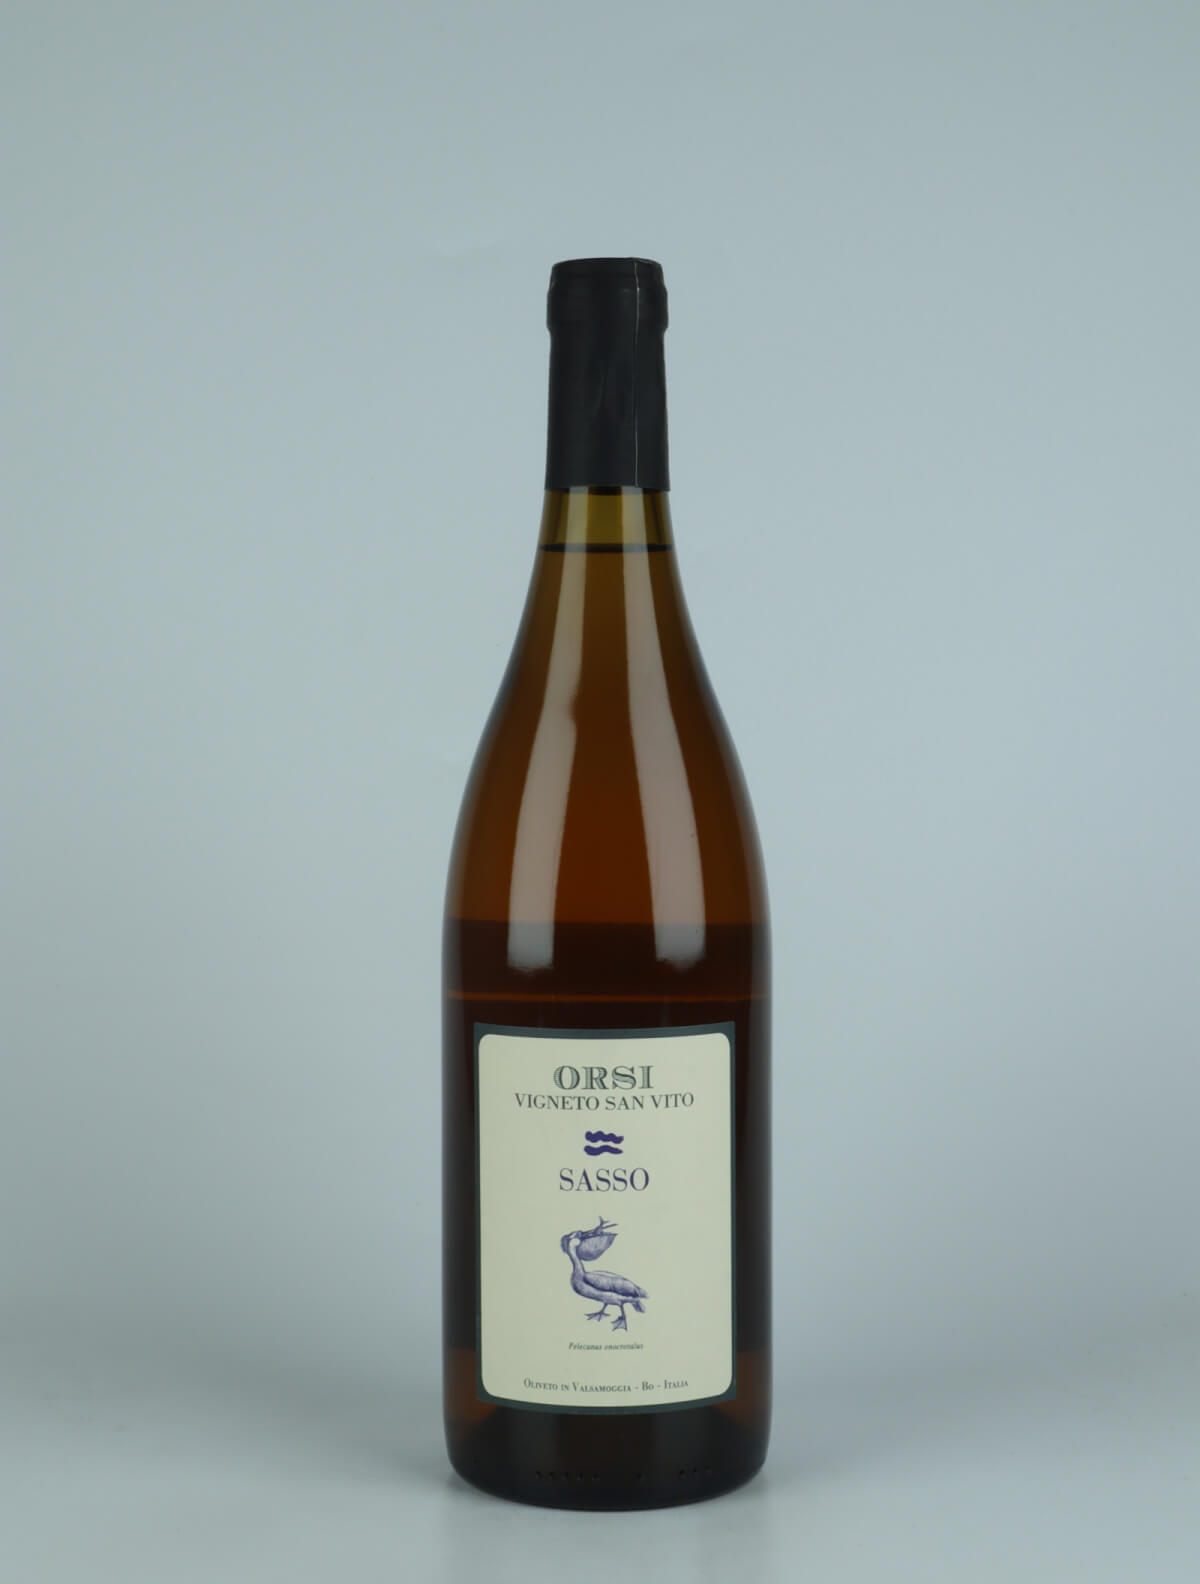 A bottle 2022 Sasso Orange wine from Orsi - San Vito, Emilia-Romagna in Italy